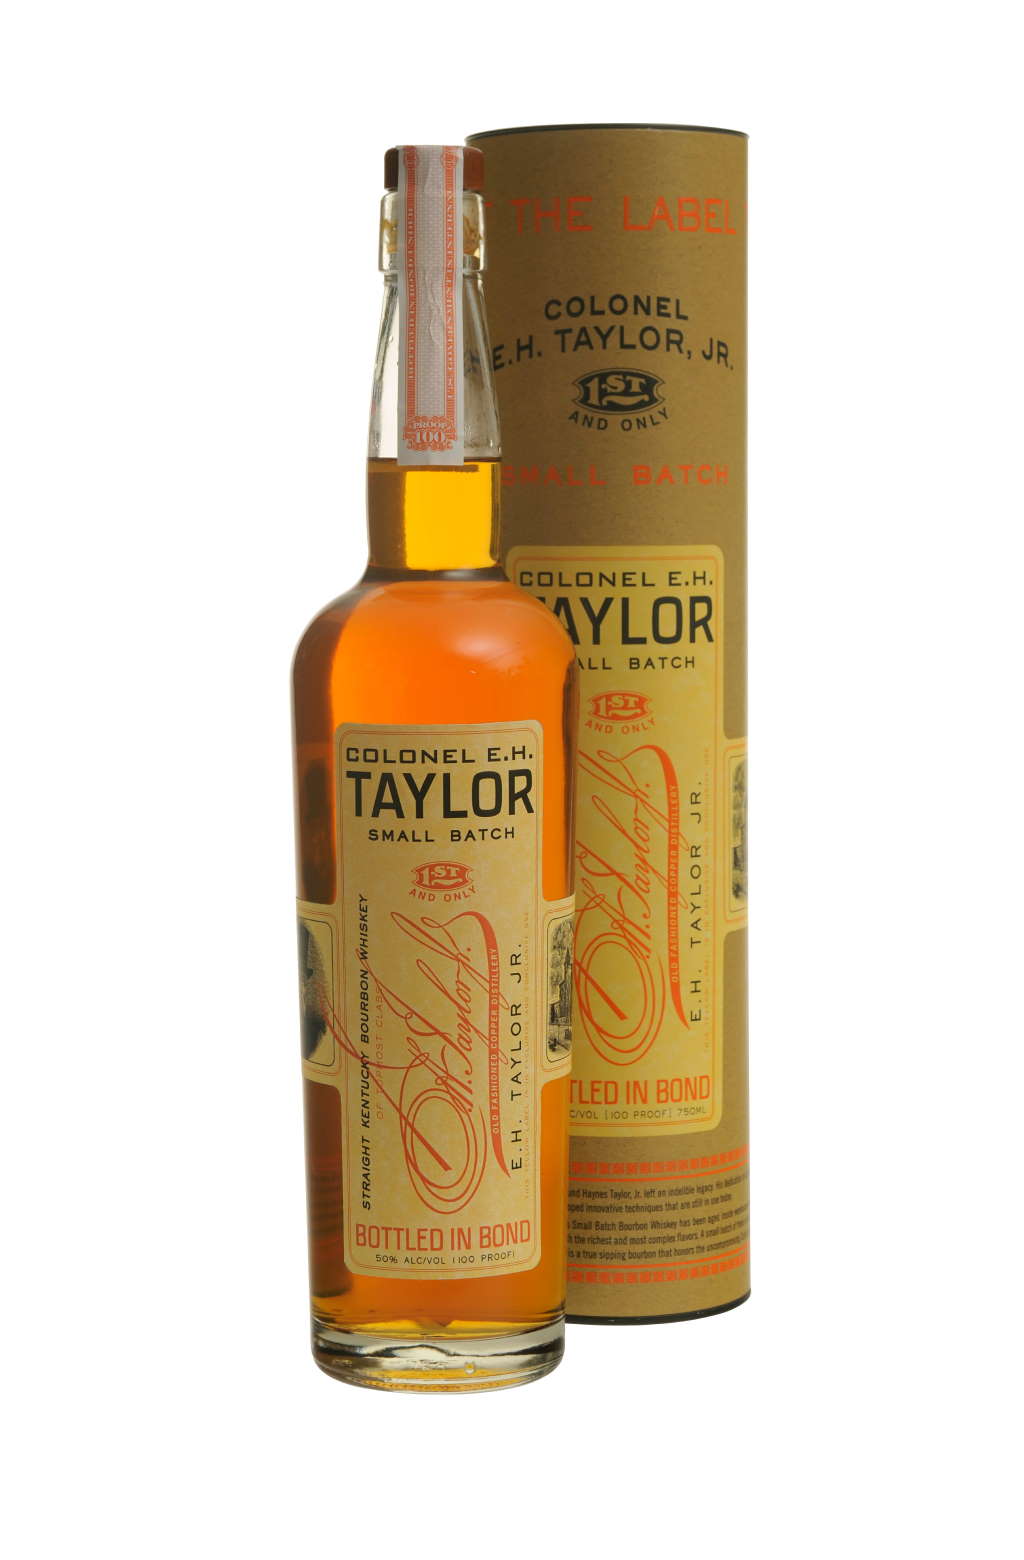 Colonel E. H. Taylor Small Batch Bourbon Whiskey